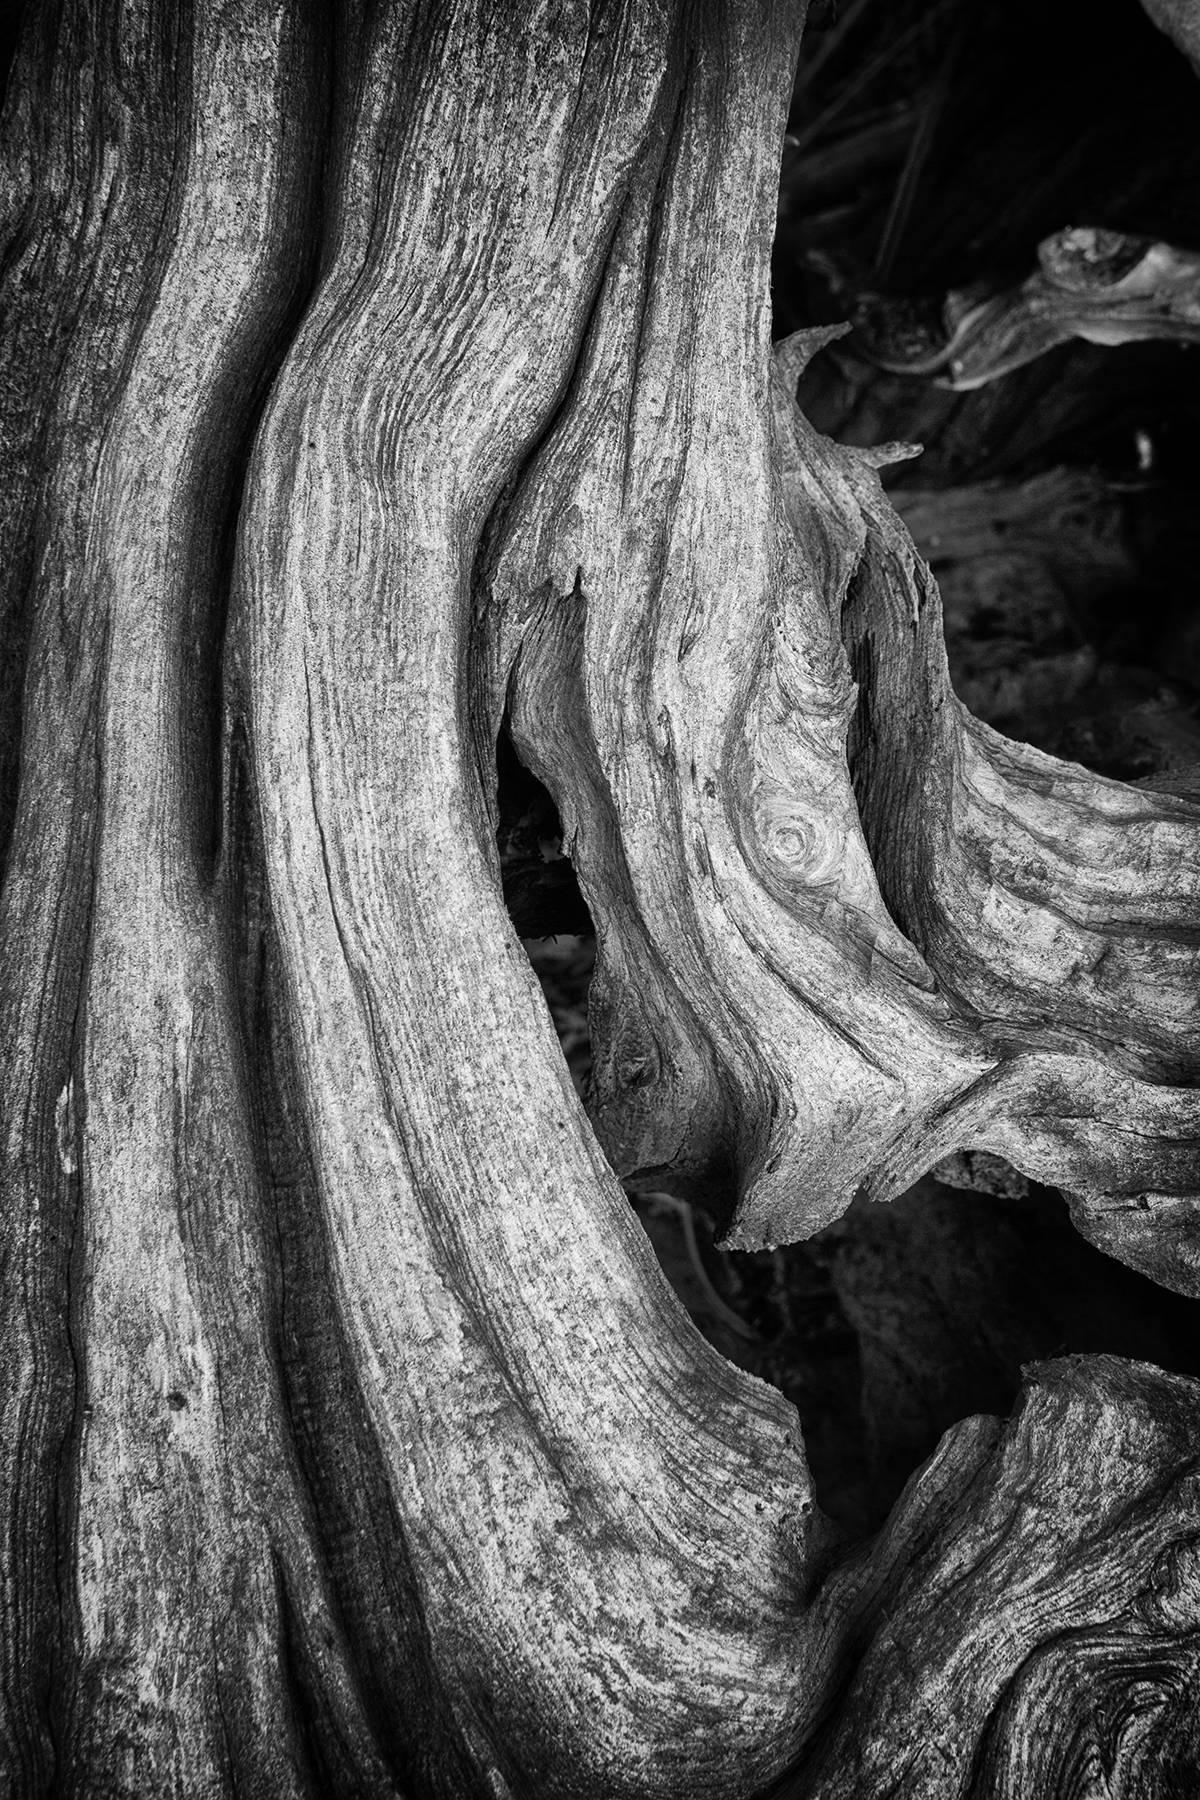 Rebecca Skinner Black and White Photograph - "Erosion #2", contemporary, landscape, tree, roots, black, white, photograph